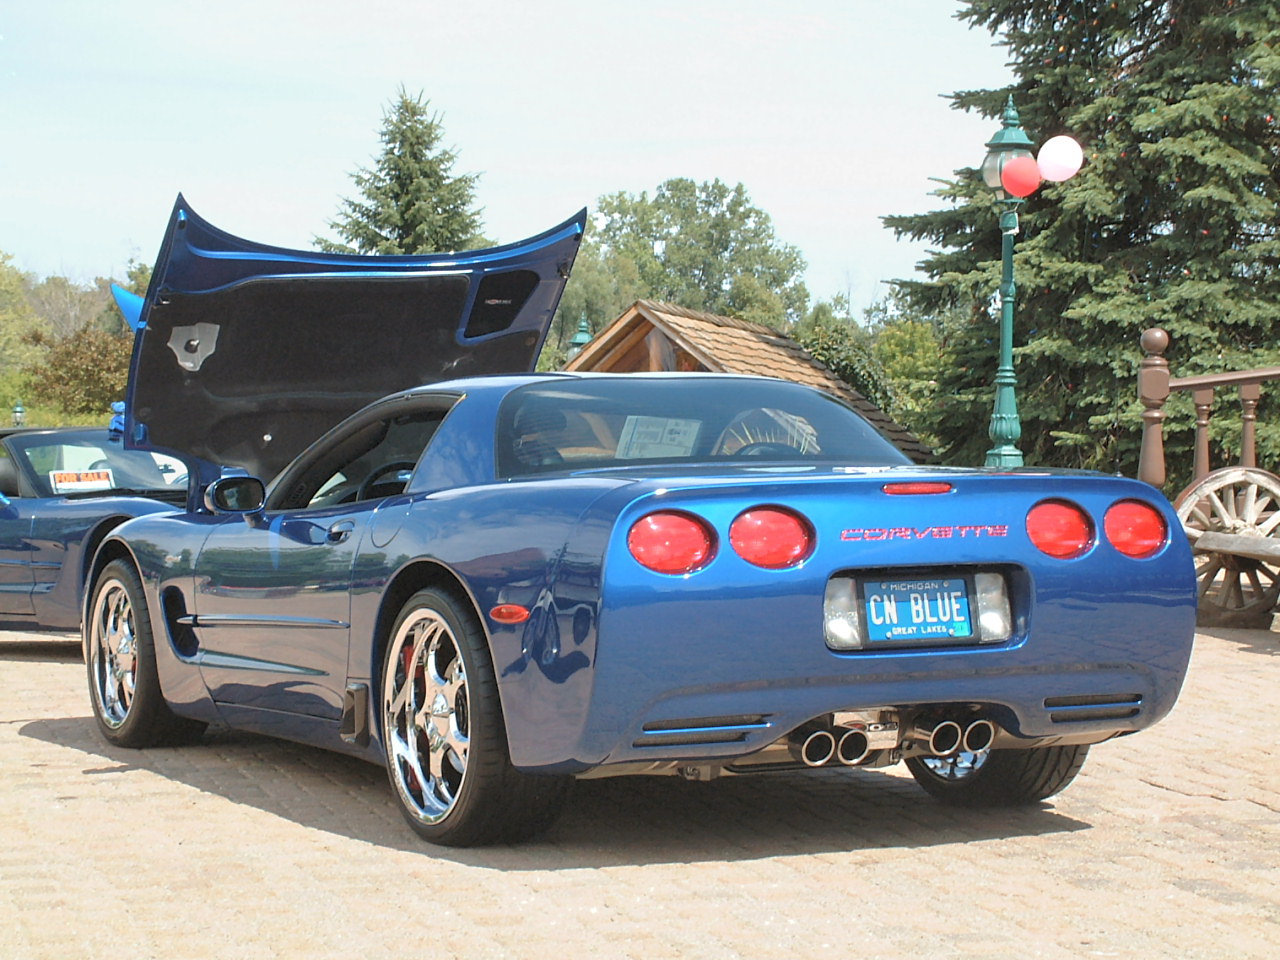 2003 Chevrolet Corvette Z06 Electron Blue Rvl Canterbury Village Car Show F